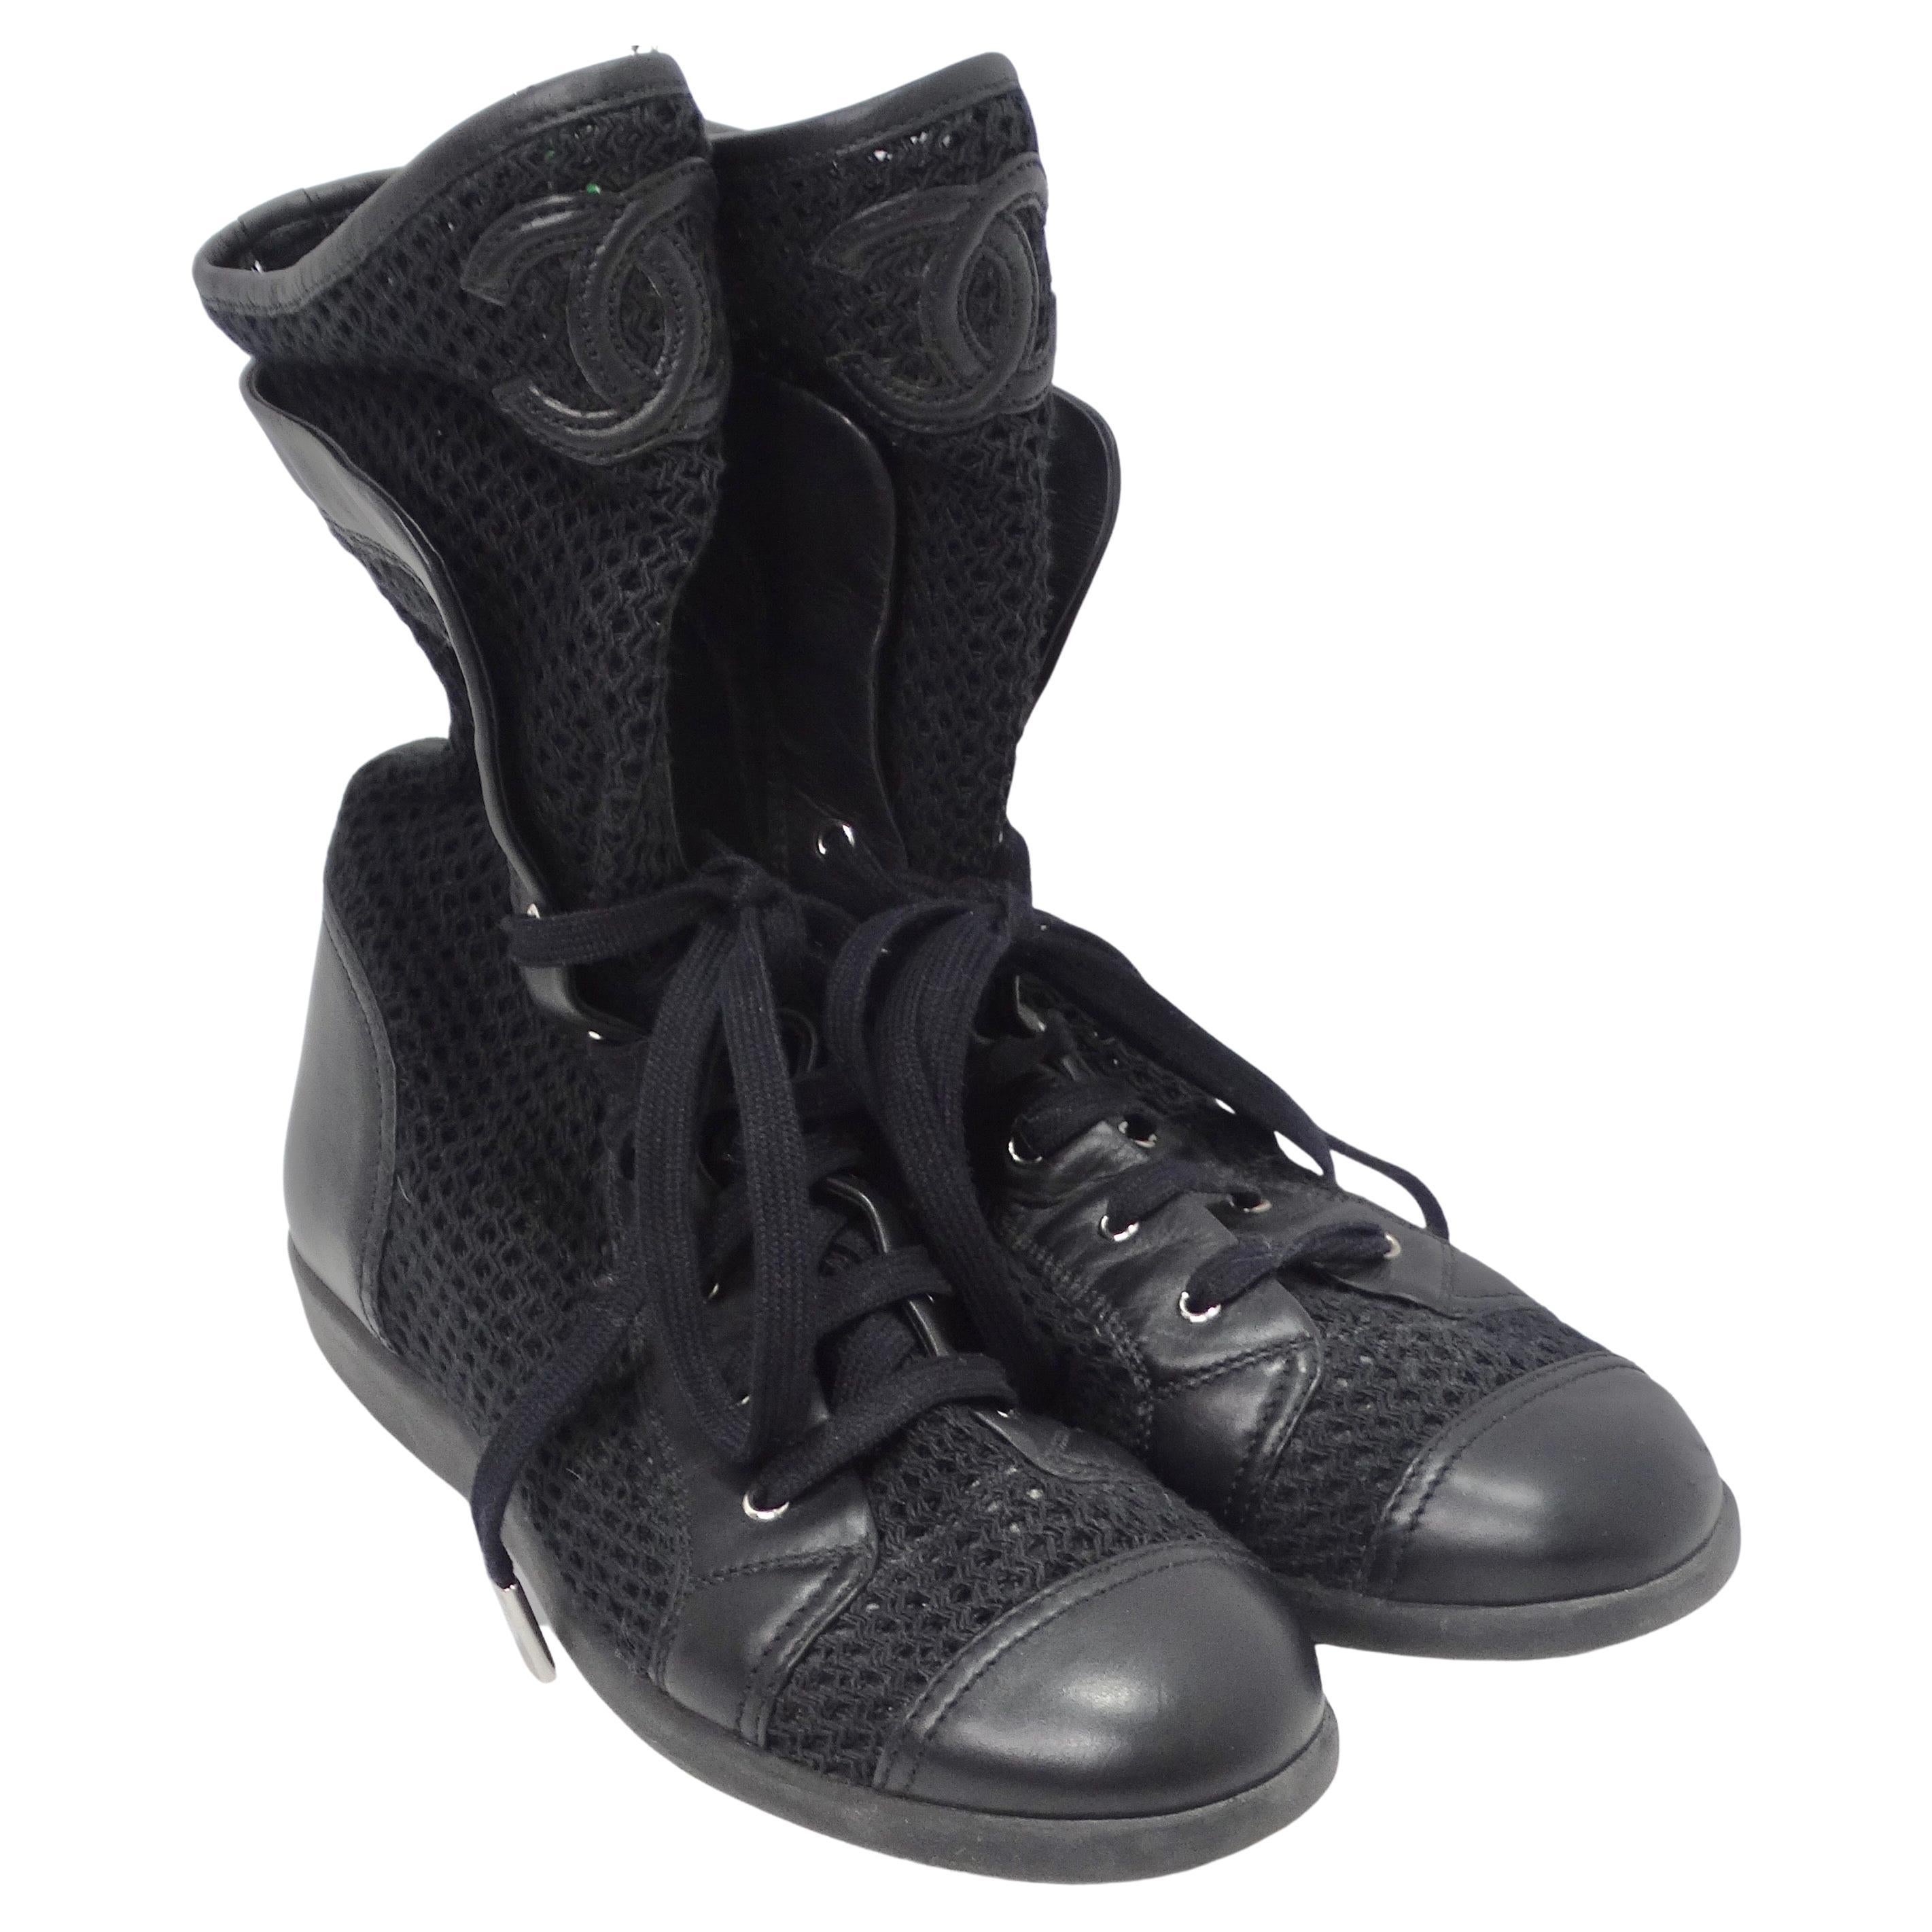 CHANEL Lambskin Patent CC Cap Toe Platform Ankle Boots 35.5 Black